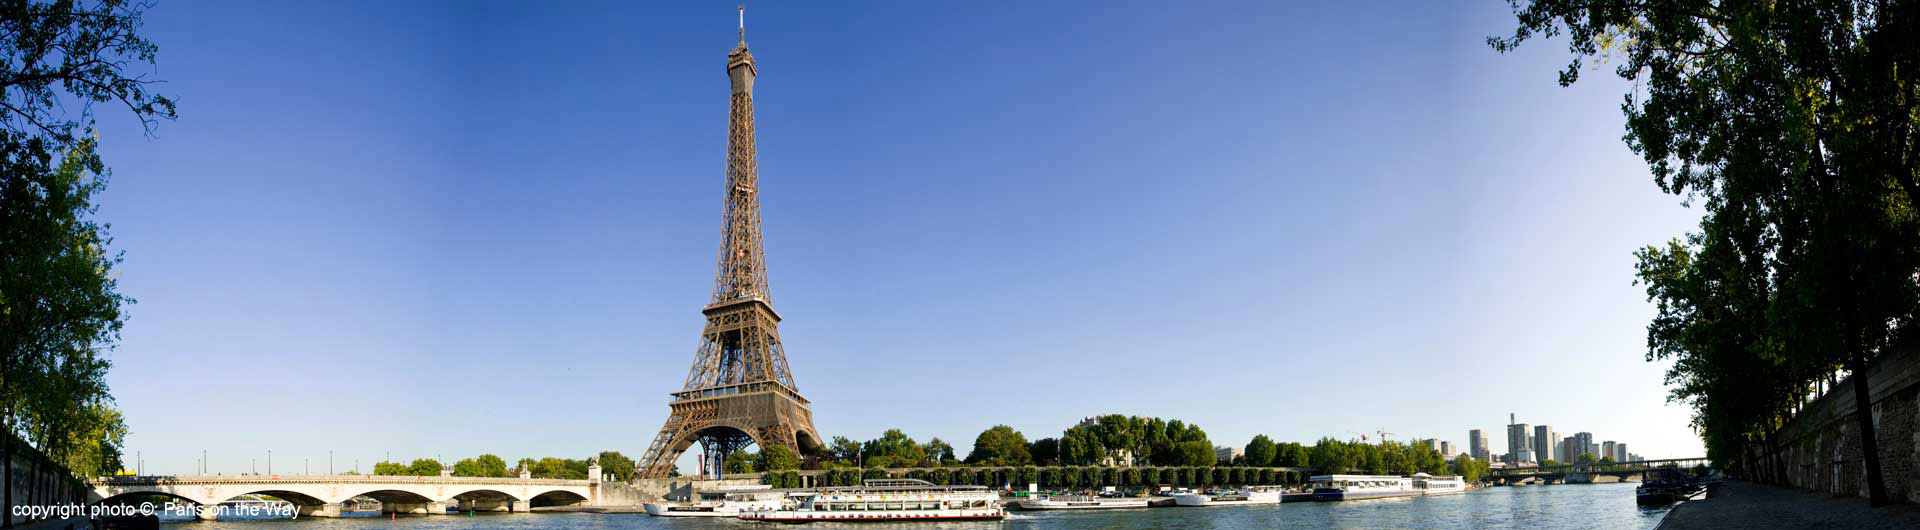 PARIS & ITS RIVERBANKS